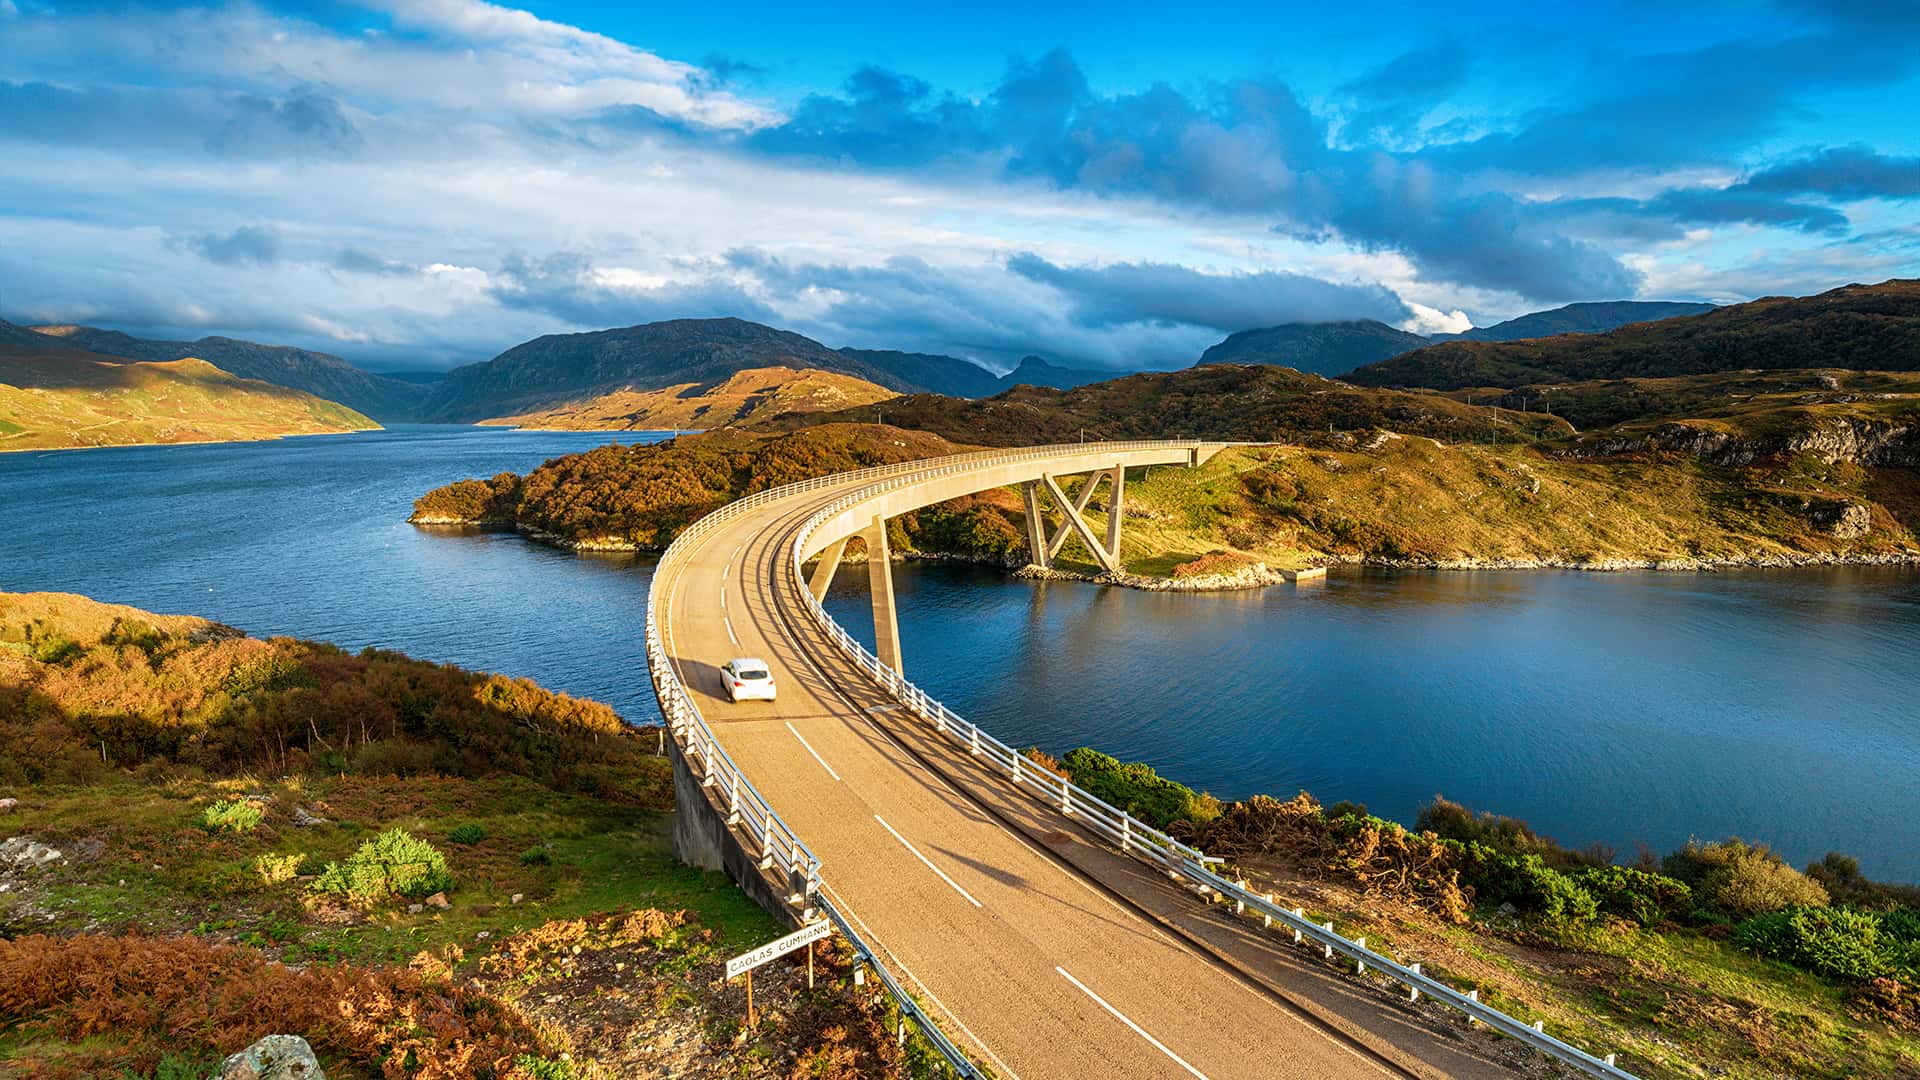 Self-drive holidays within Scotland and Ireland